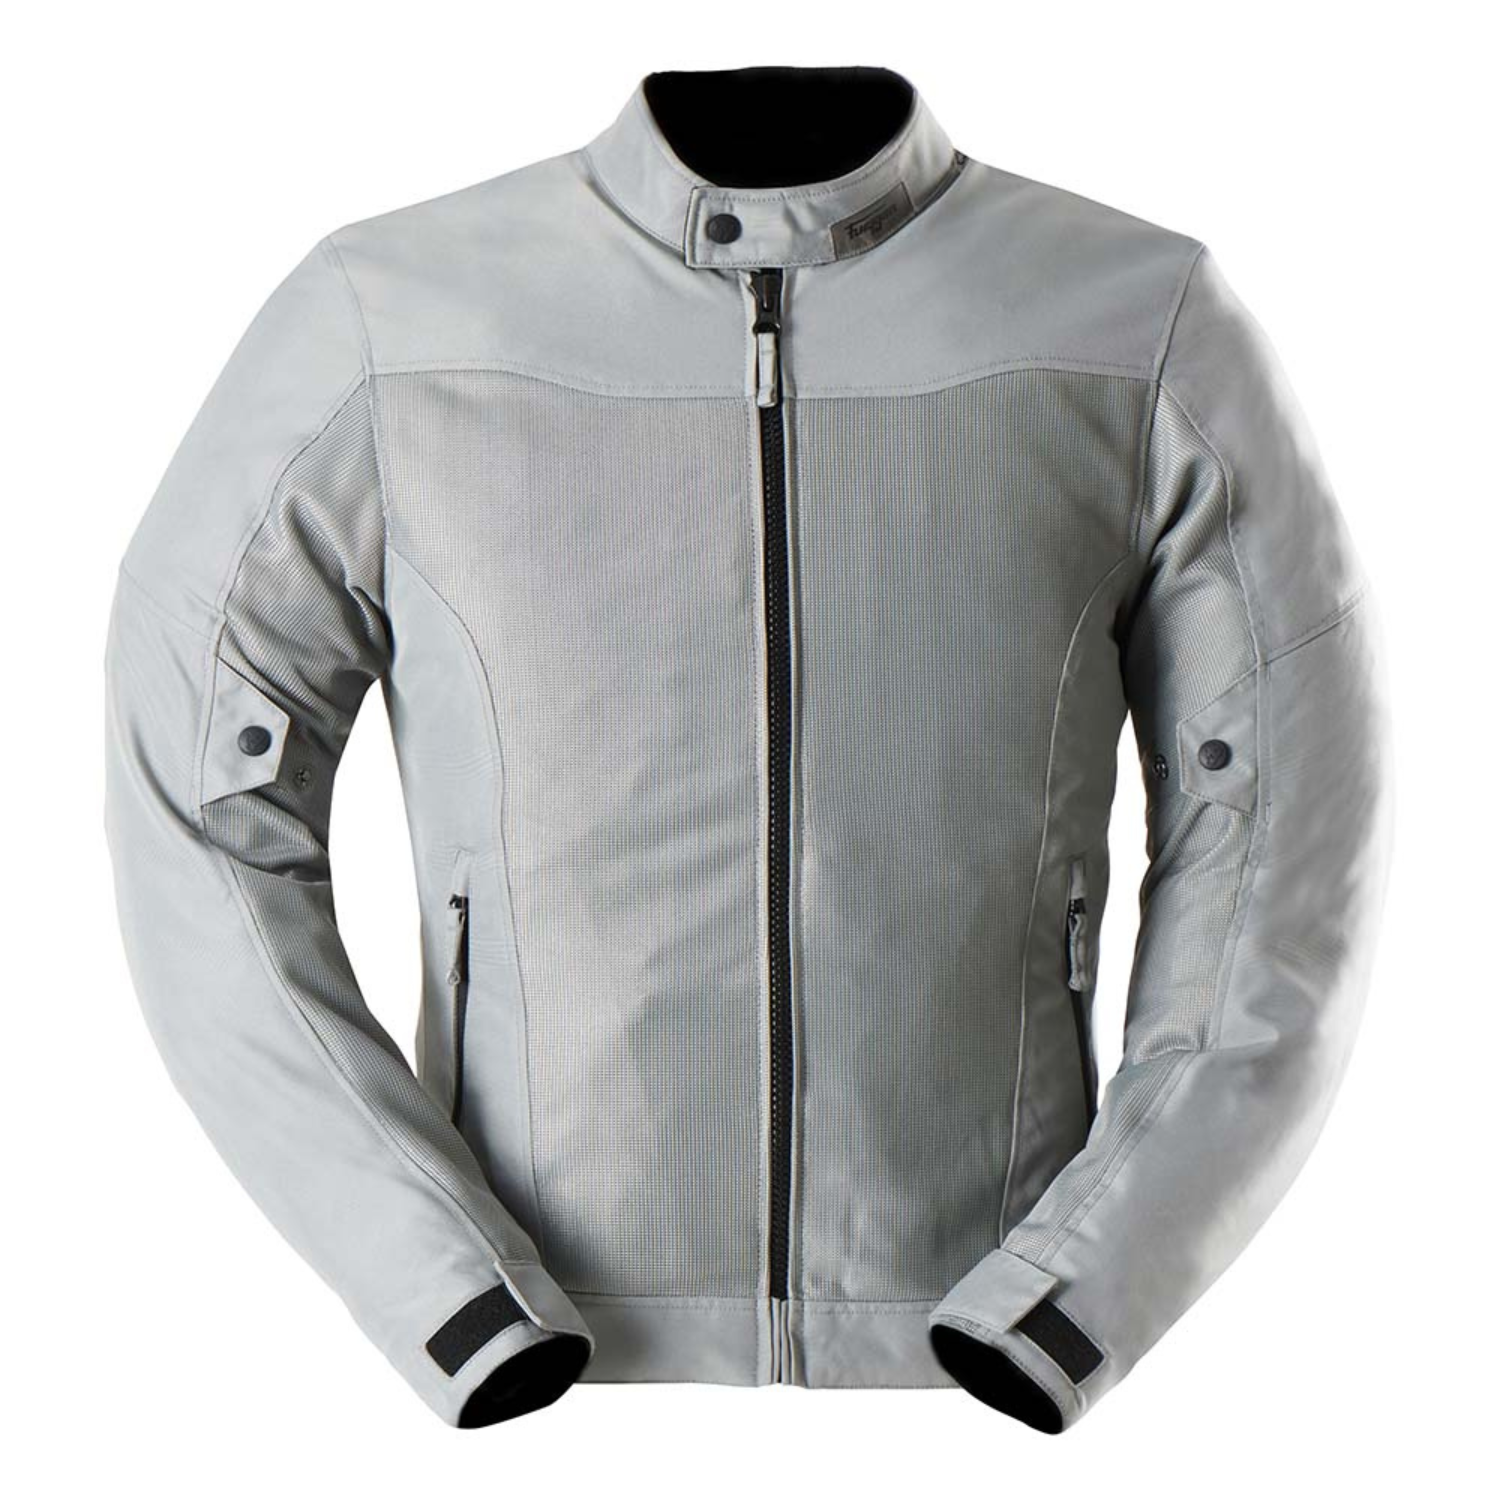 Image of Furygan Mistral Evo 3 Jacket Grey Taille XL